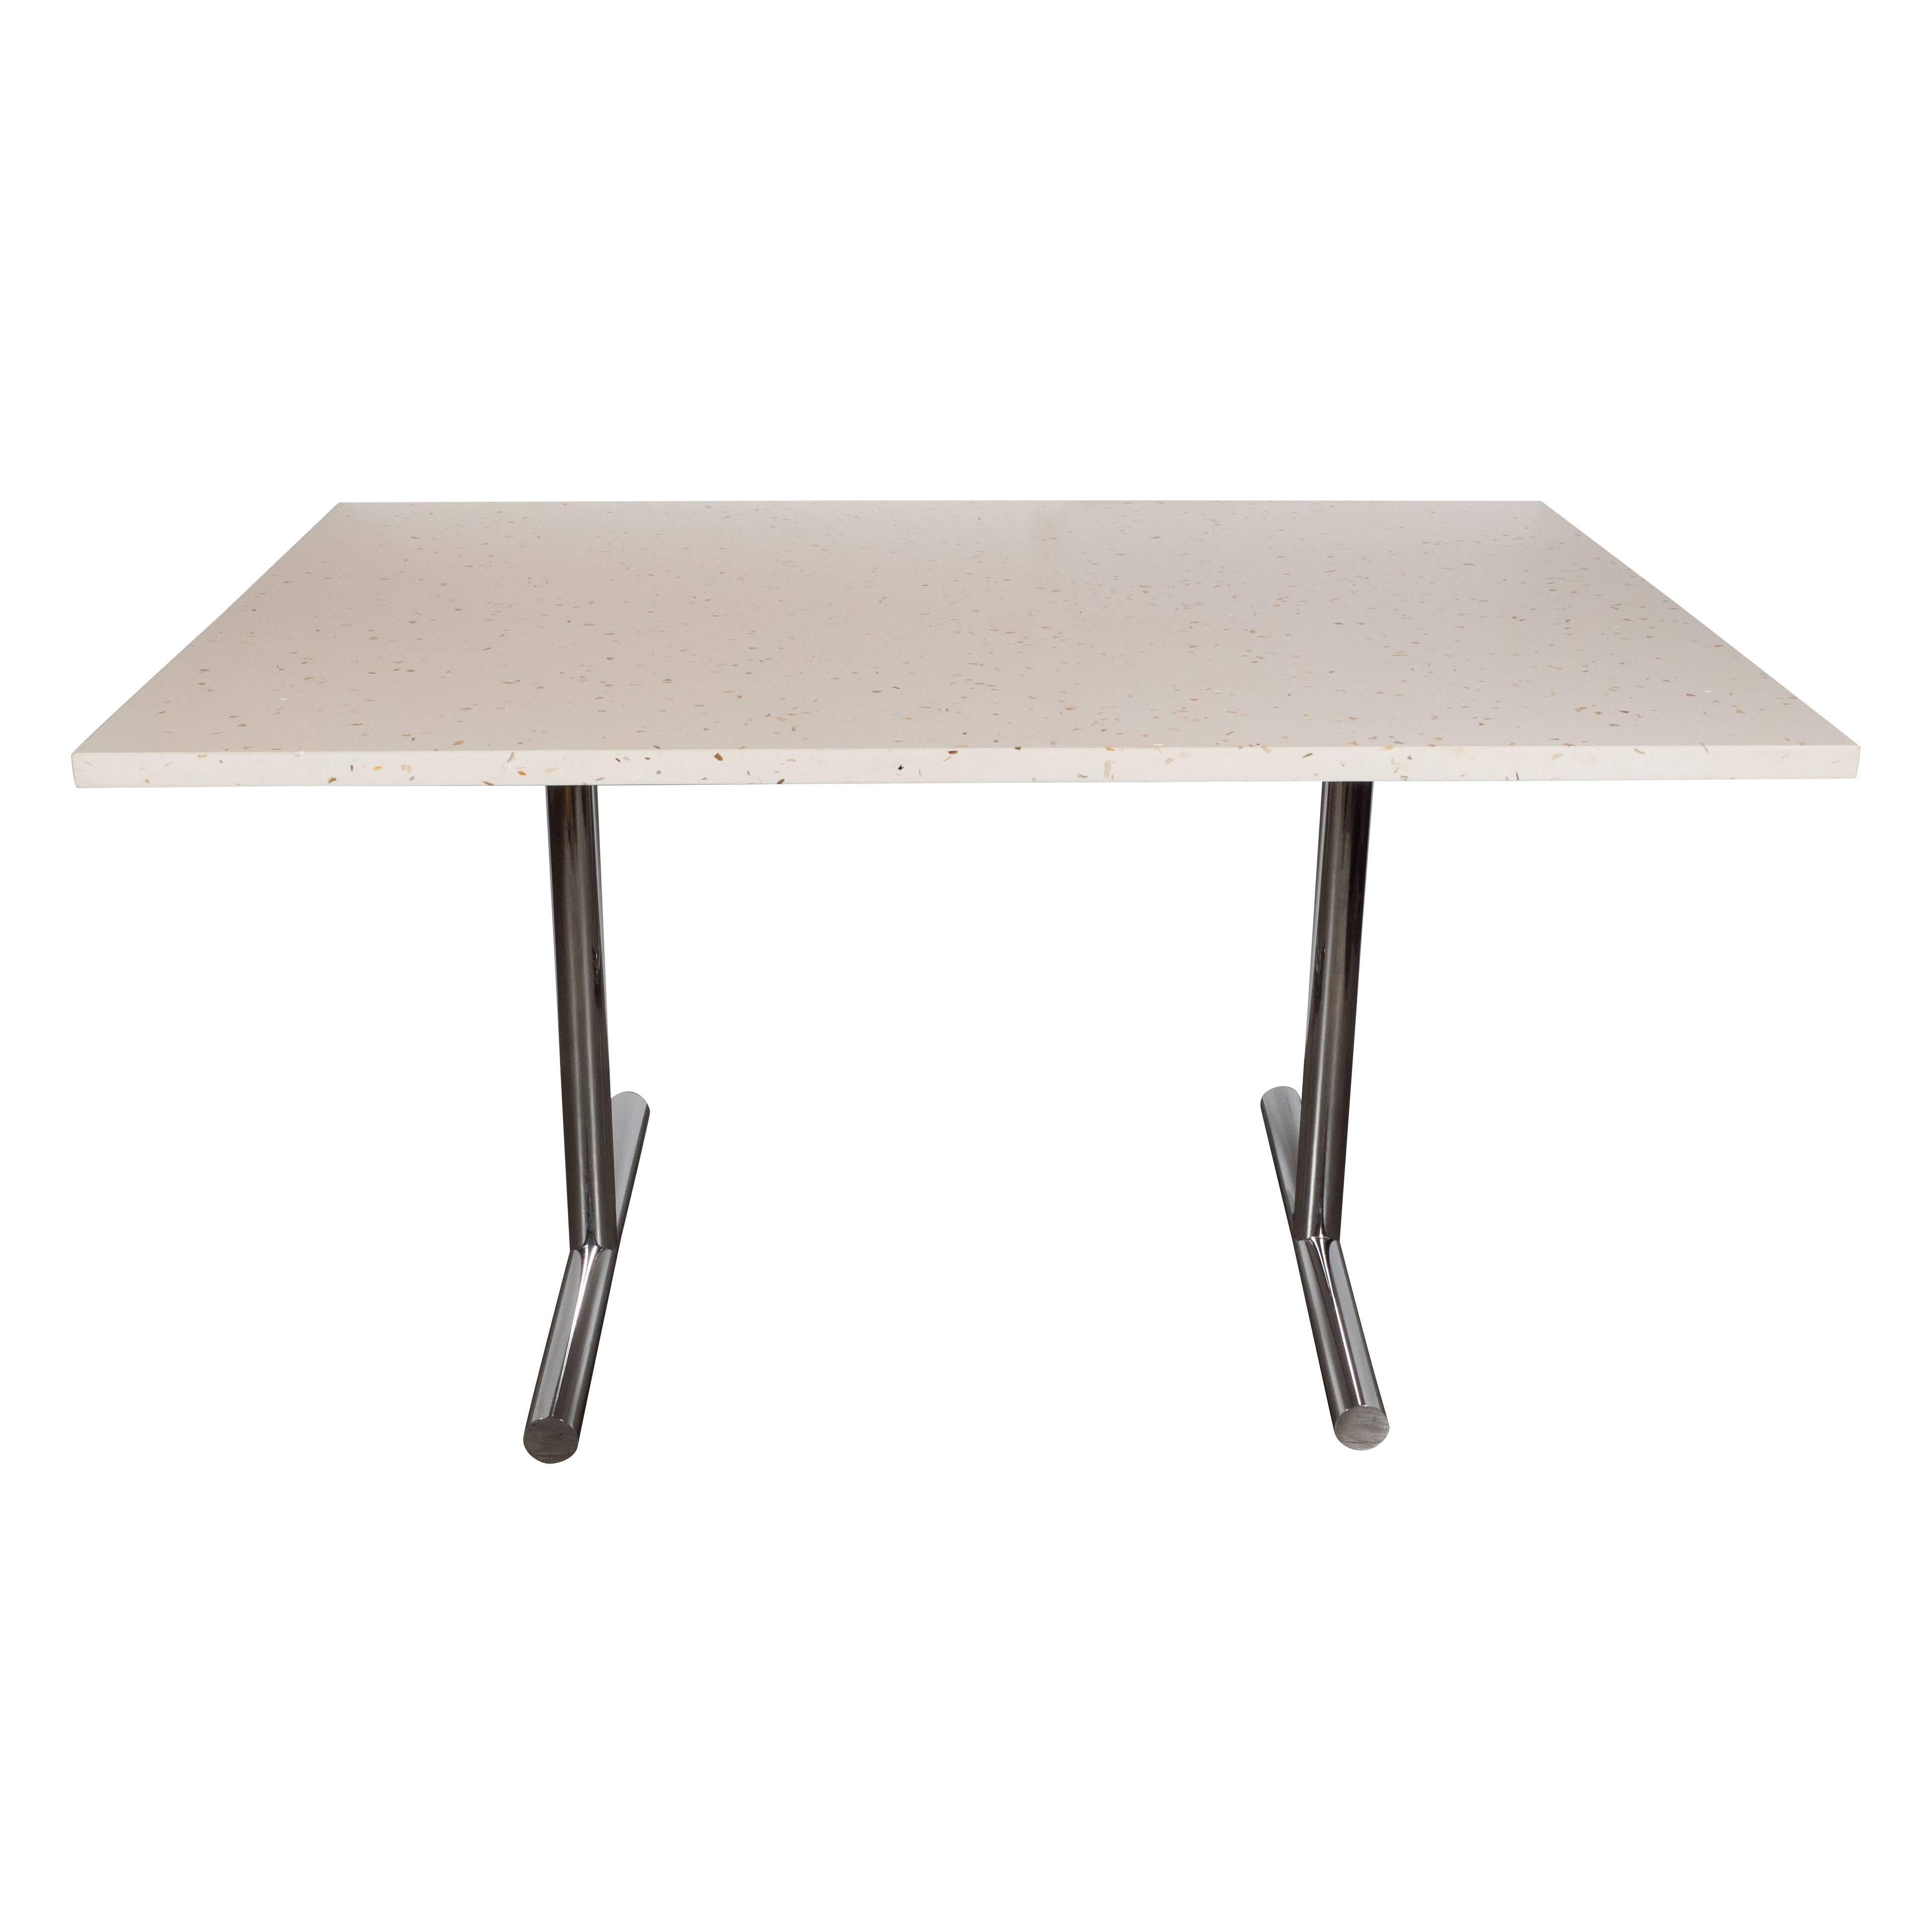 American Mid-Century Modern Terrazzo Table with Tubular T-Form Chrome Legs